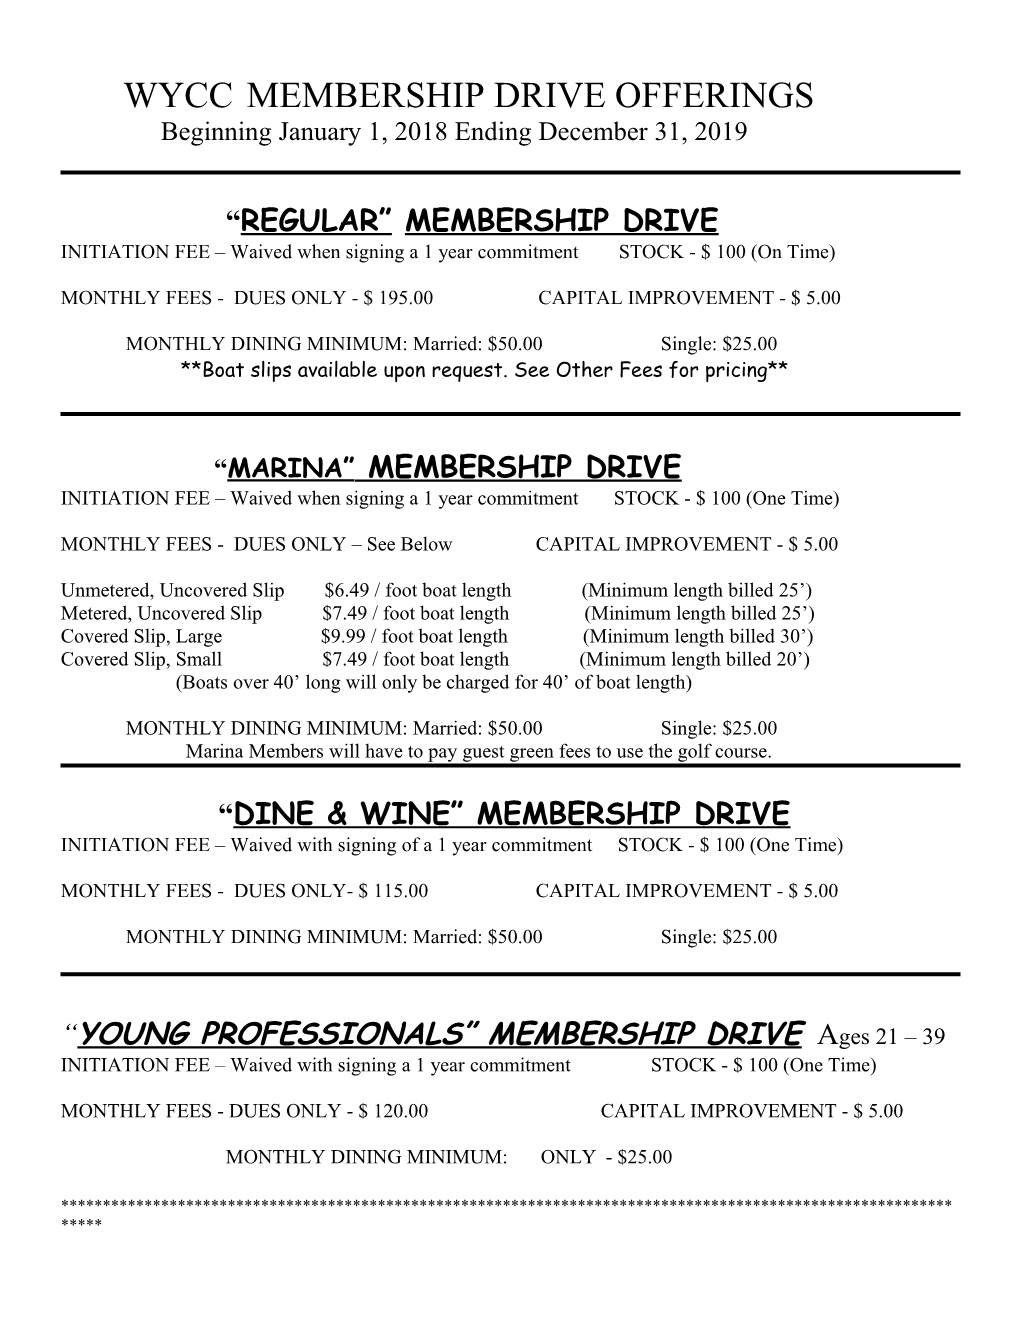 Wycc Membership Drive Offerings